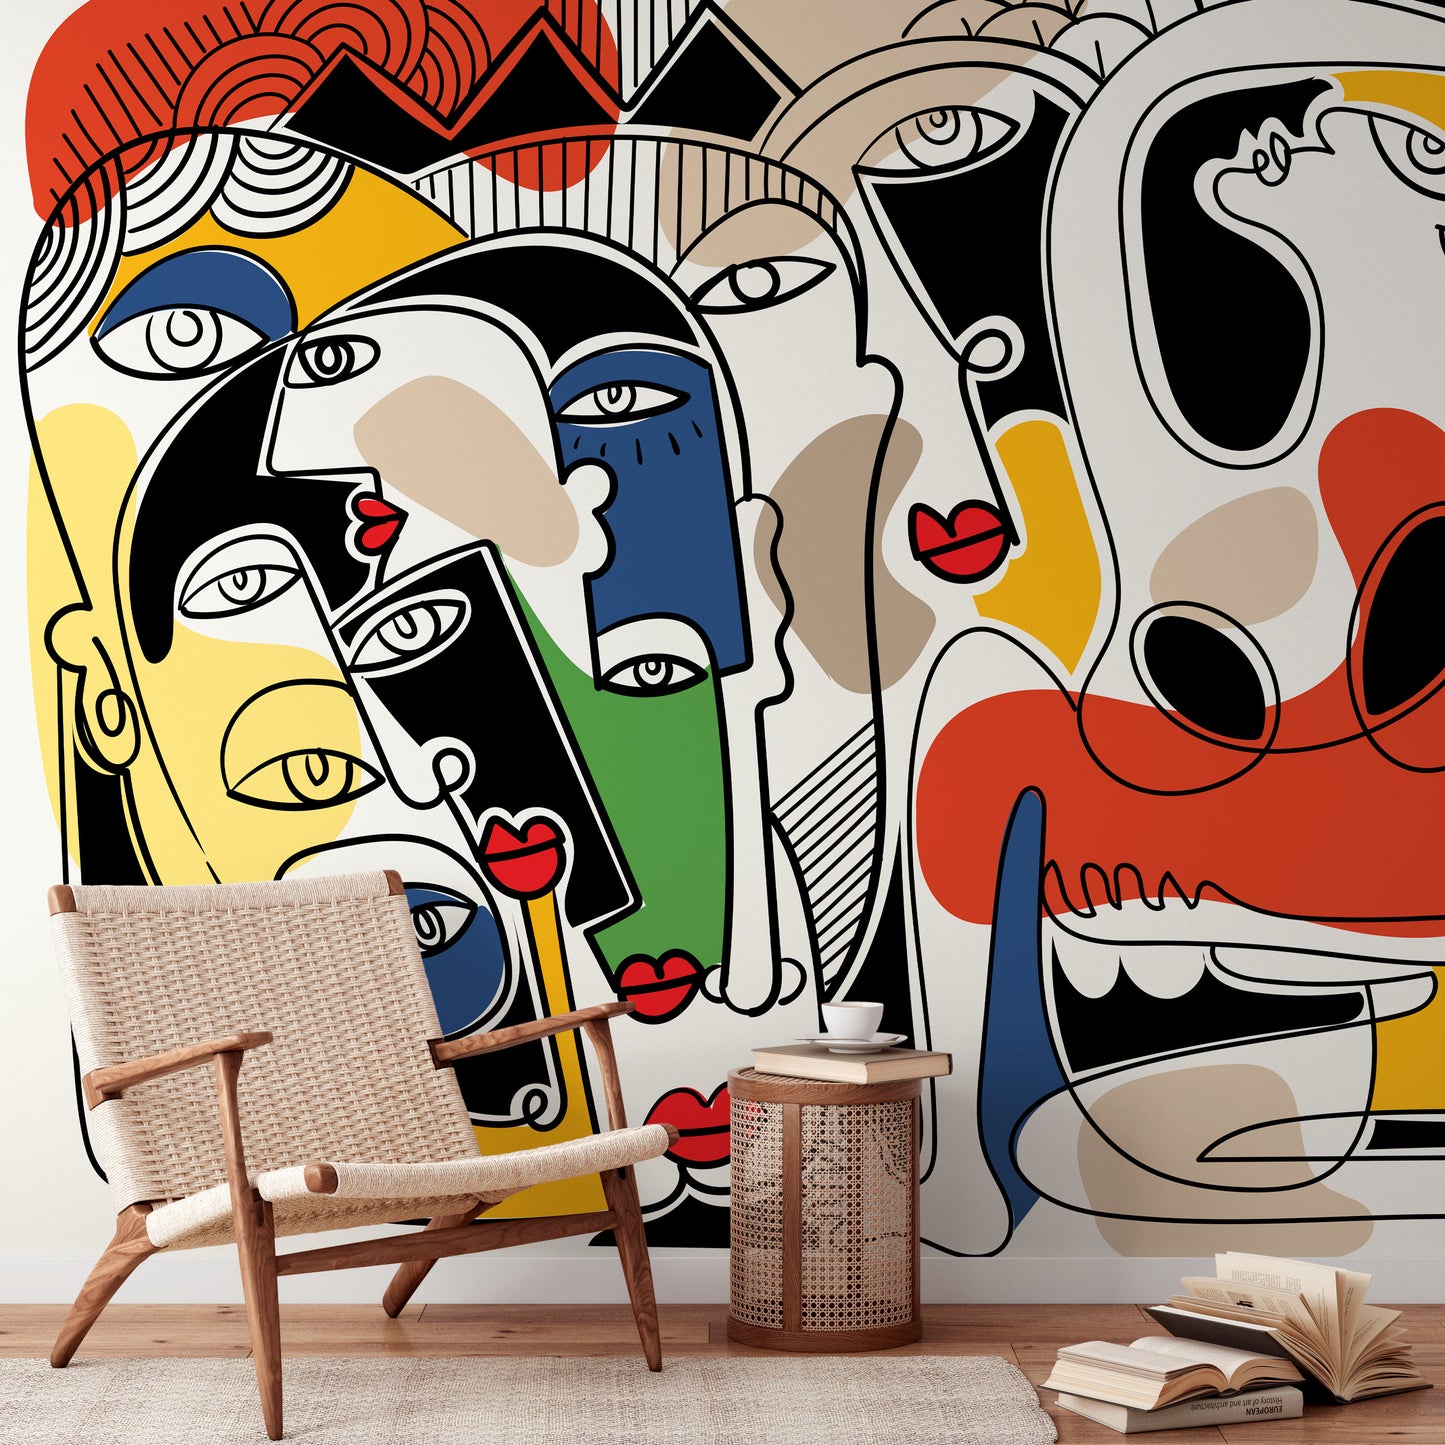 Surreal Line Art Mural Abstract Wallpaper Hand Drawing Wallpaper Peel and Stick Wallpaper Home Decor - D586